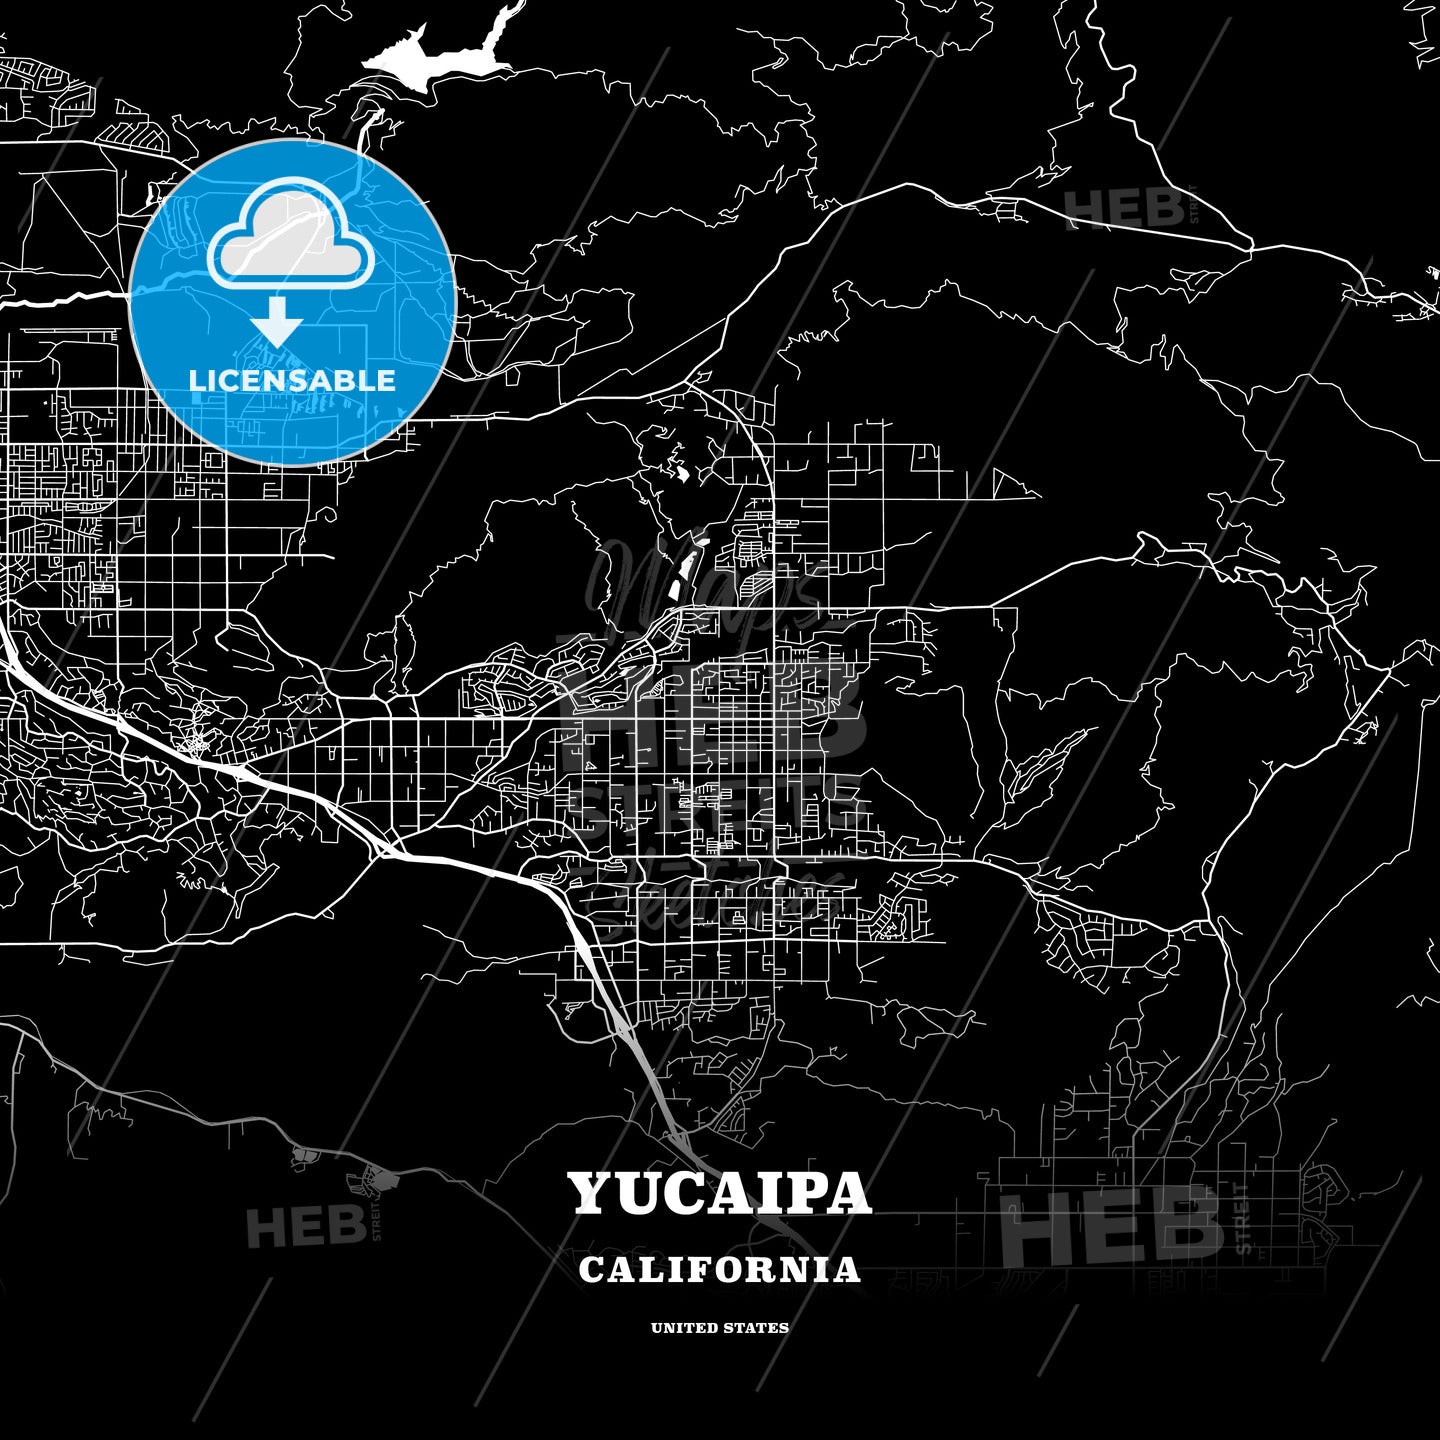 Yucaipa, California, USA map